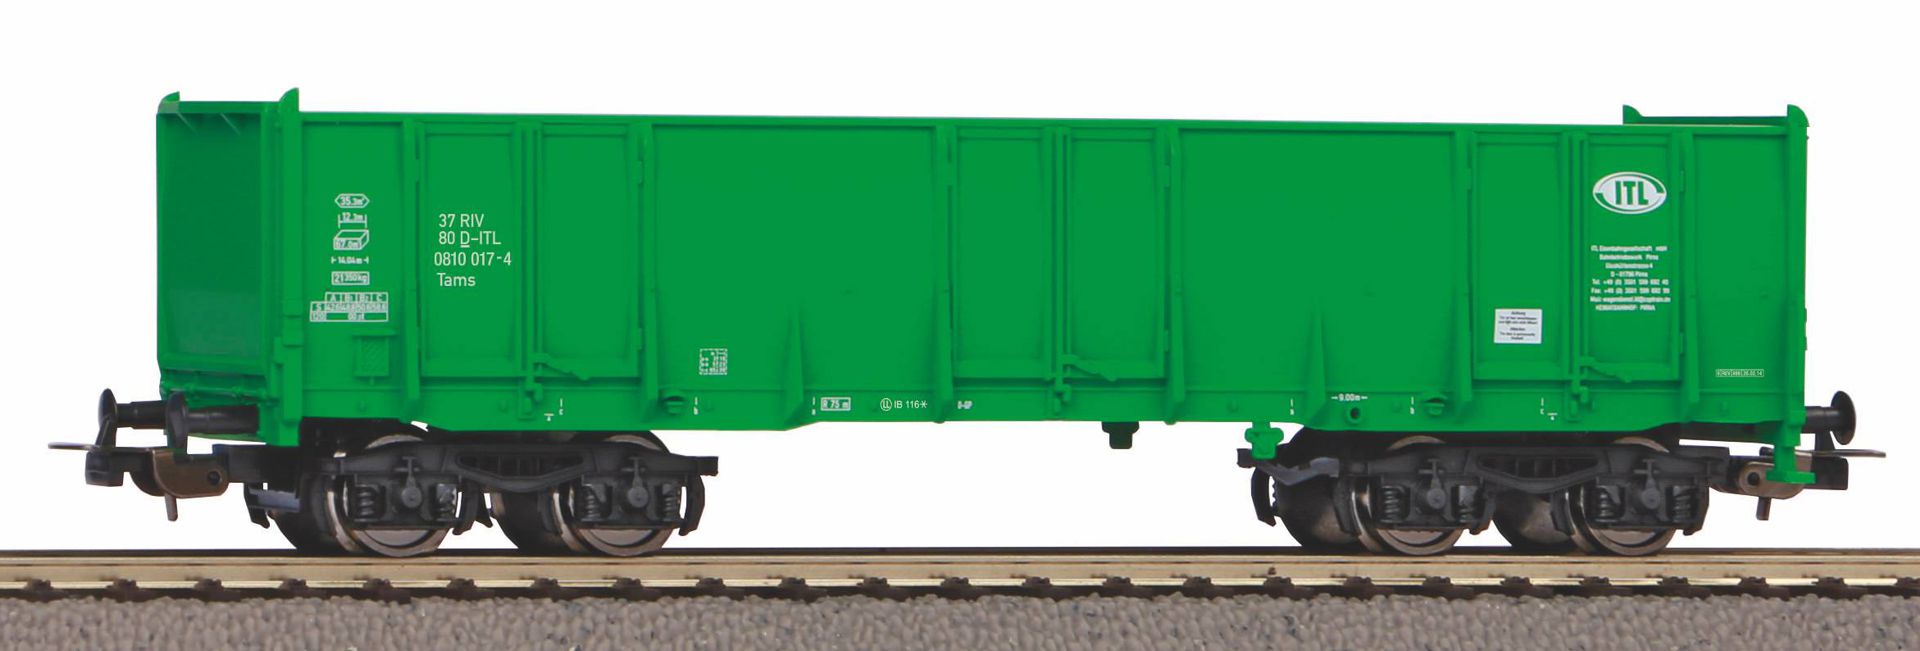 Piko 98546-C1 - Hochbordwagen Eaos , grün, ITL, Ep.VI, Betriebsnummer 1